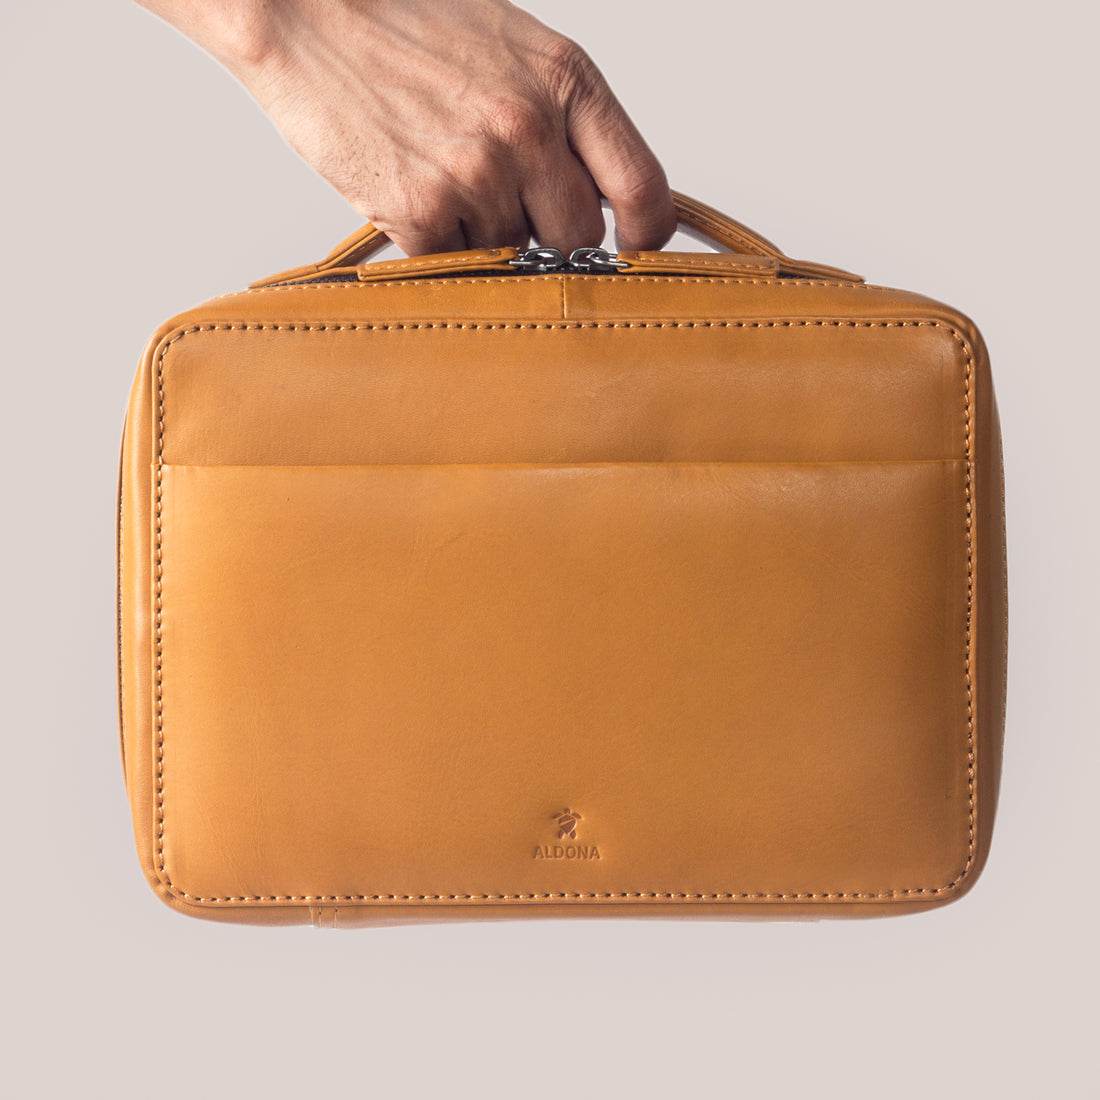 Leather Tech Accessory Organiser - Vintage Tan